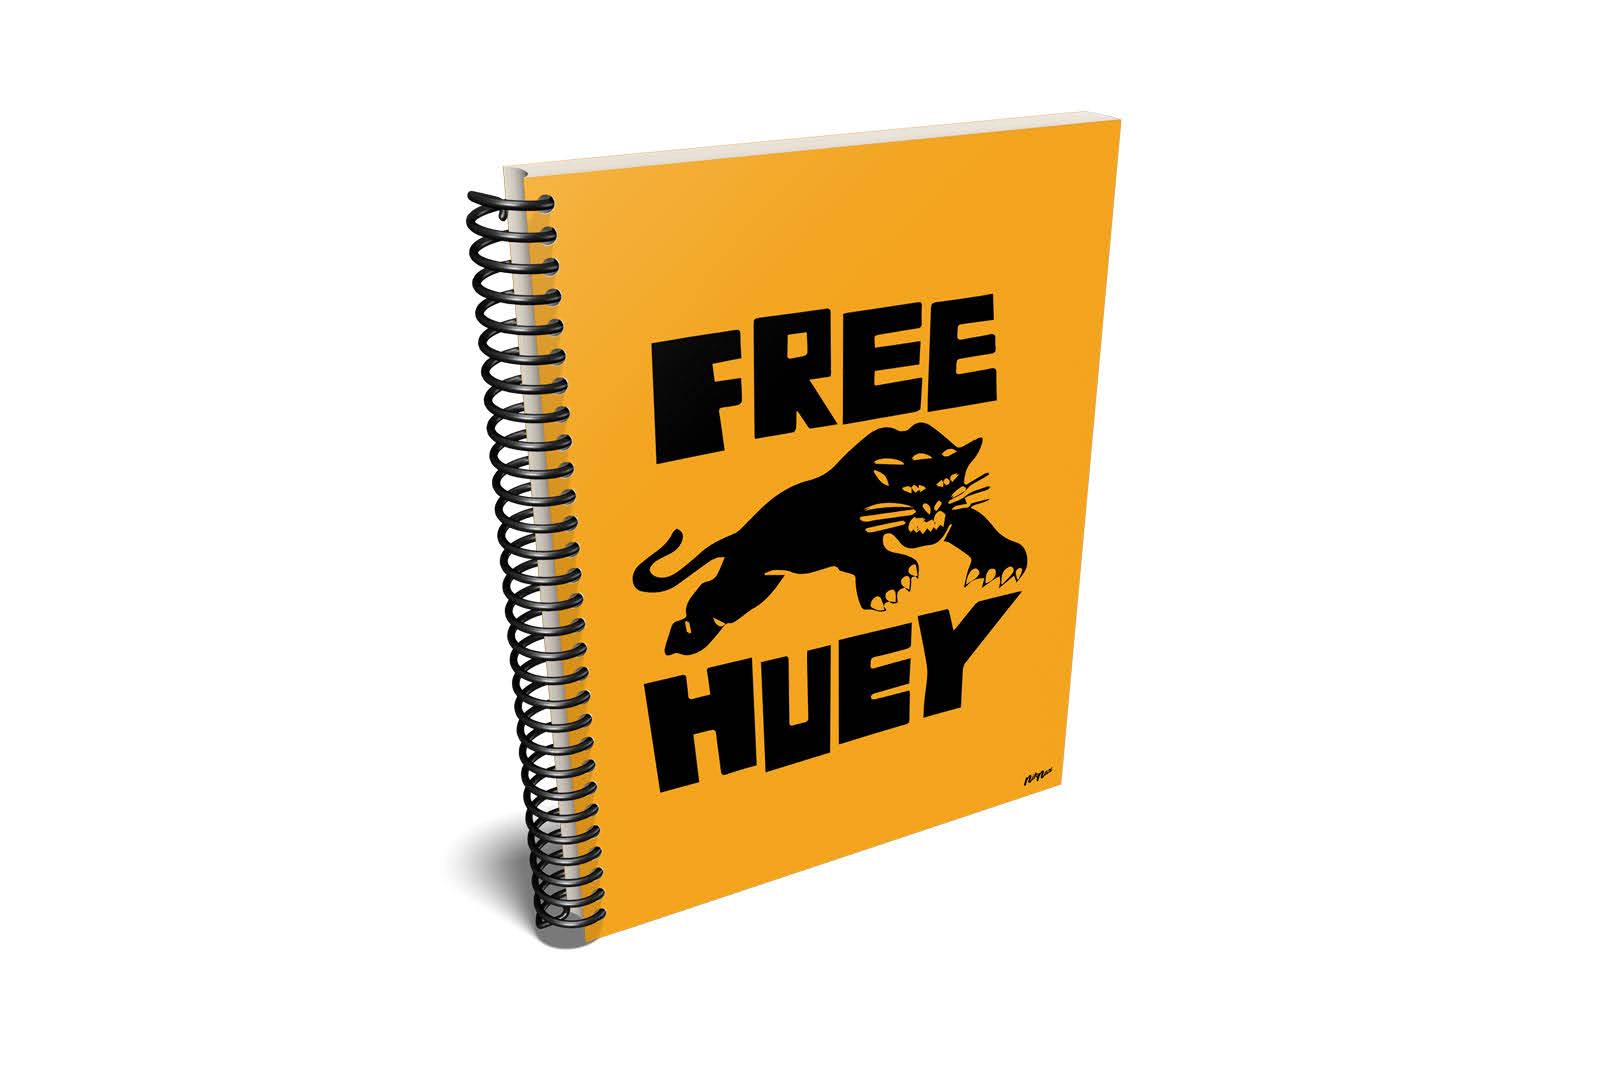 FREE HUEY NOTEBOOK – NikNax Stationery  More